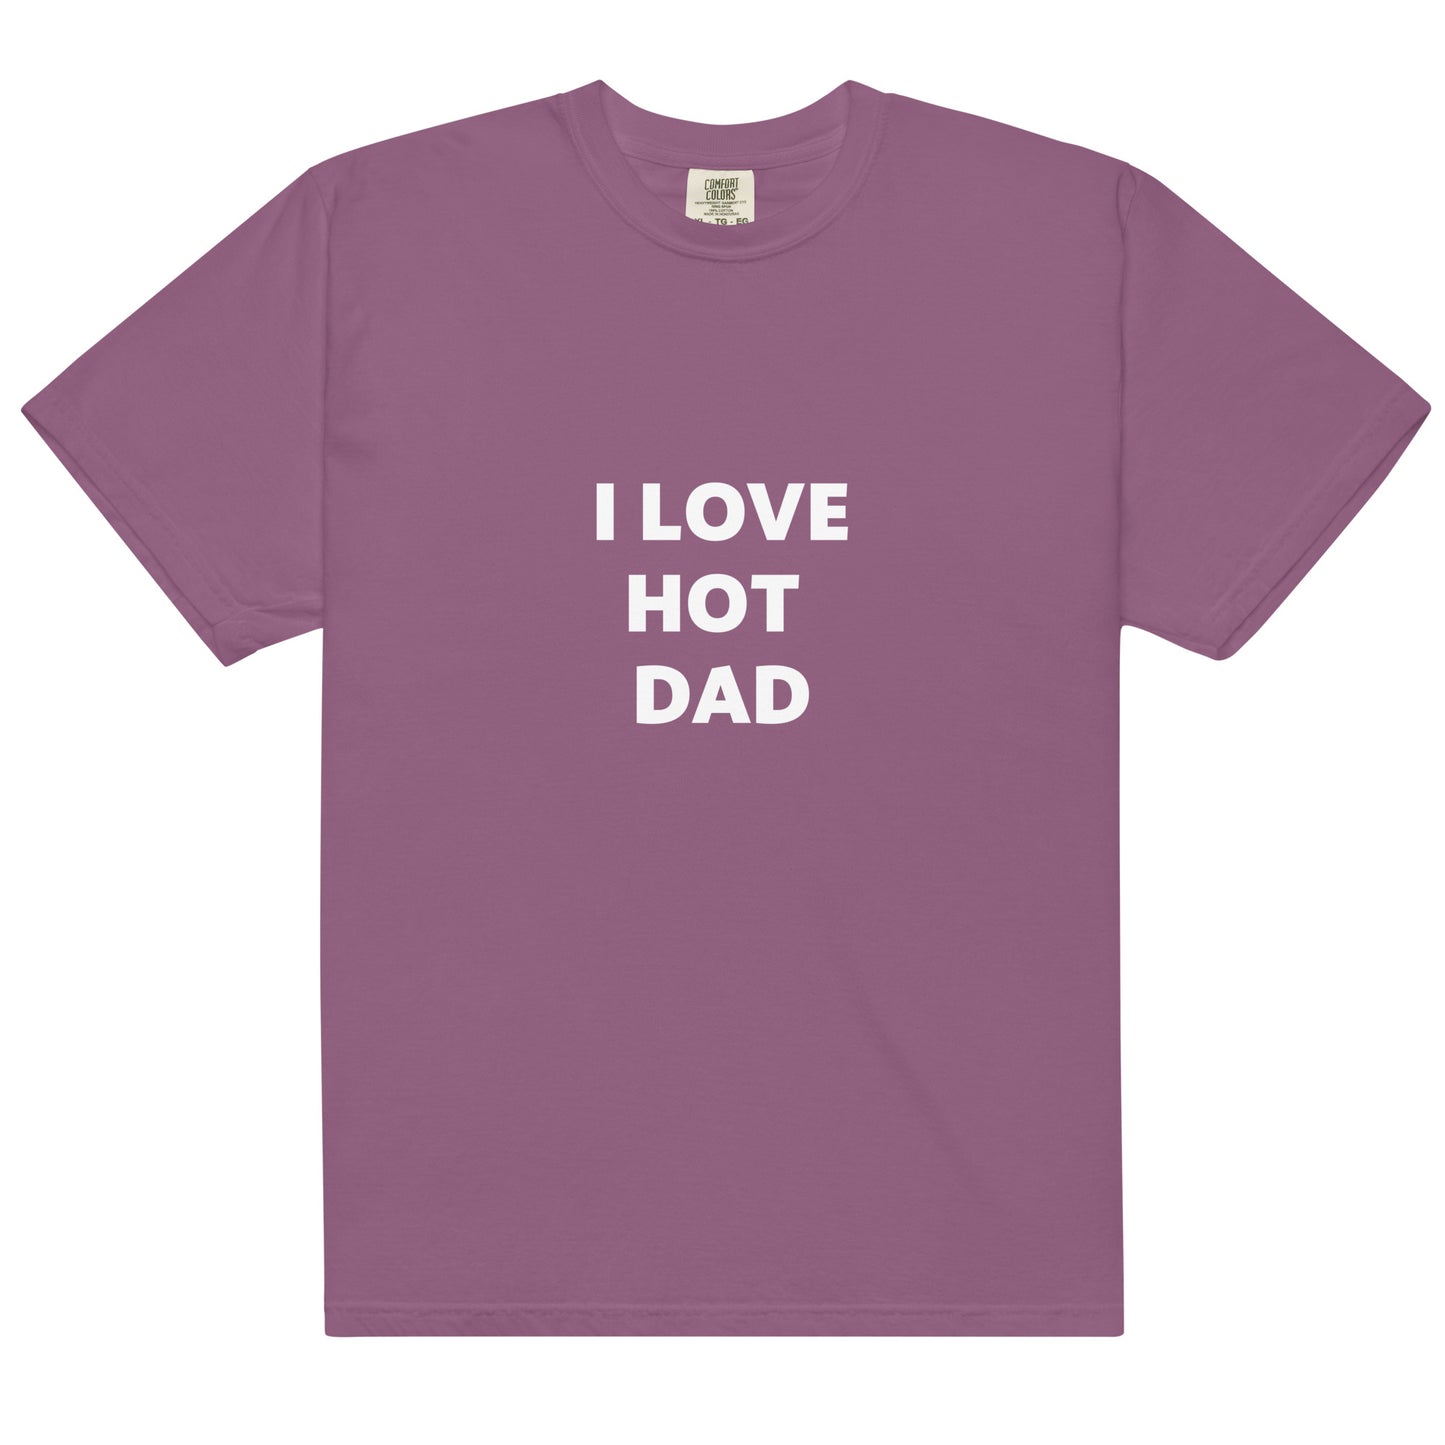 I Love Hot Dad Printed Tshirts